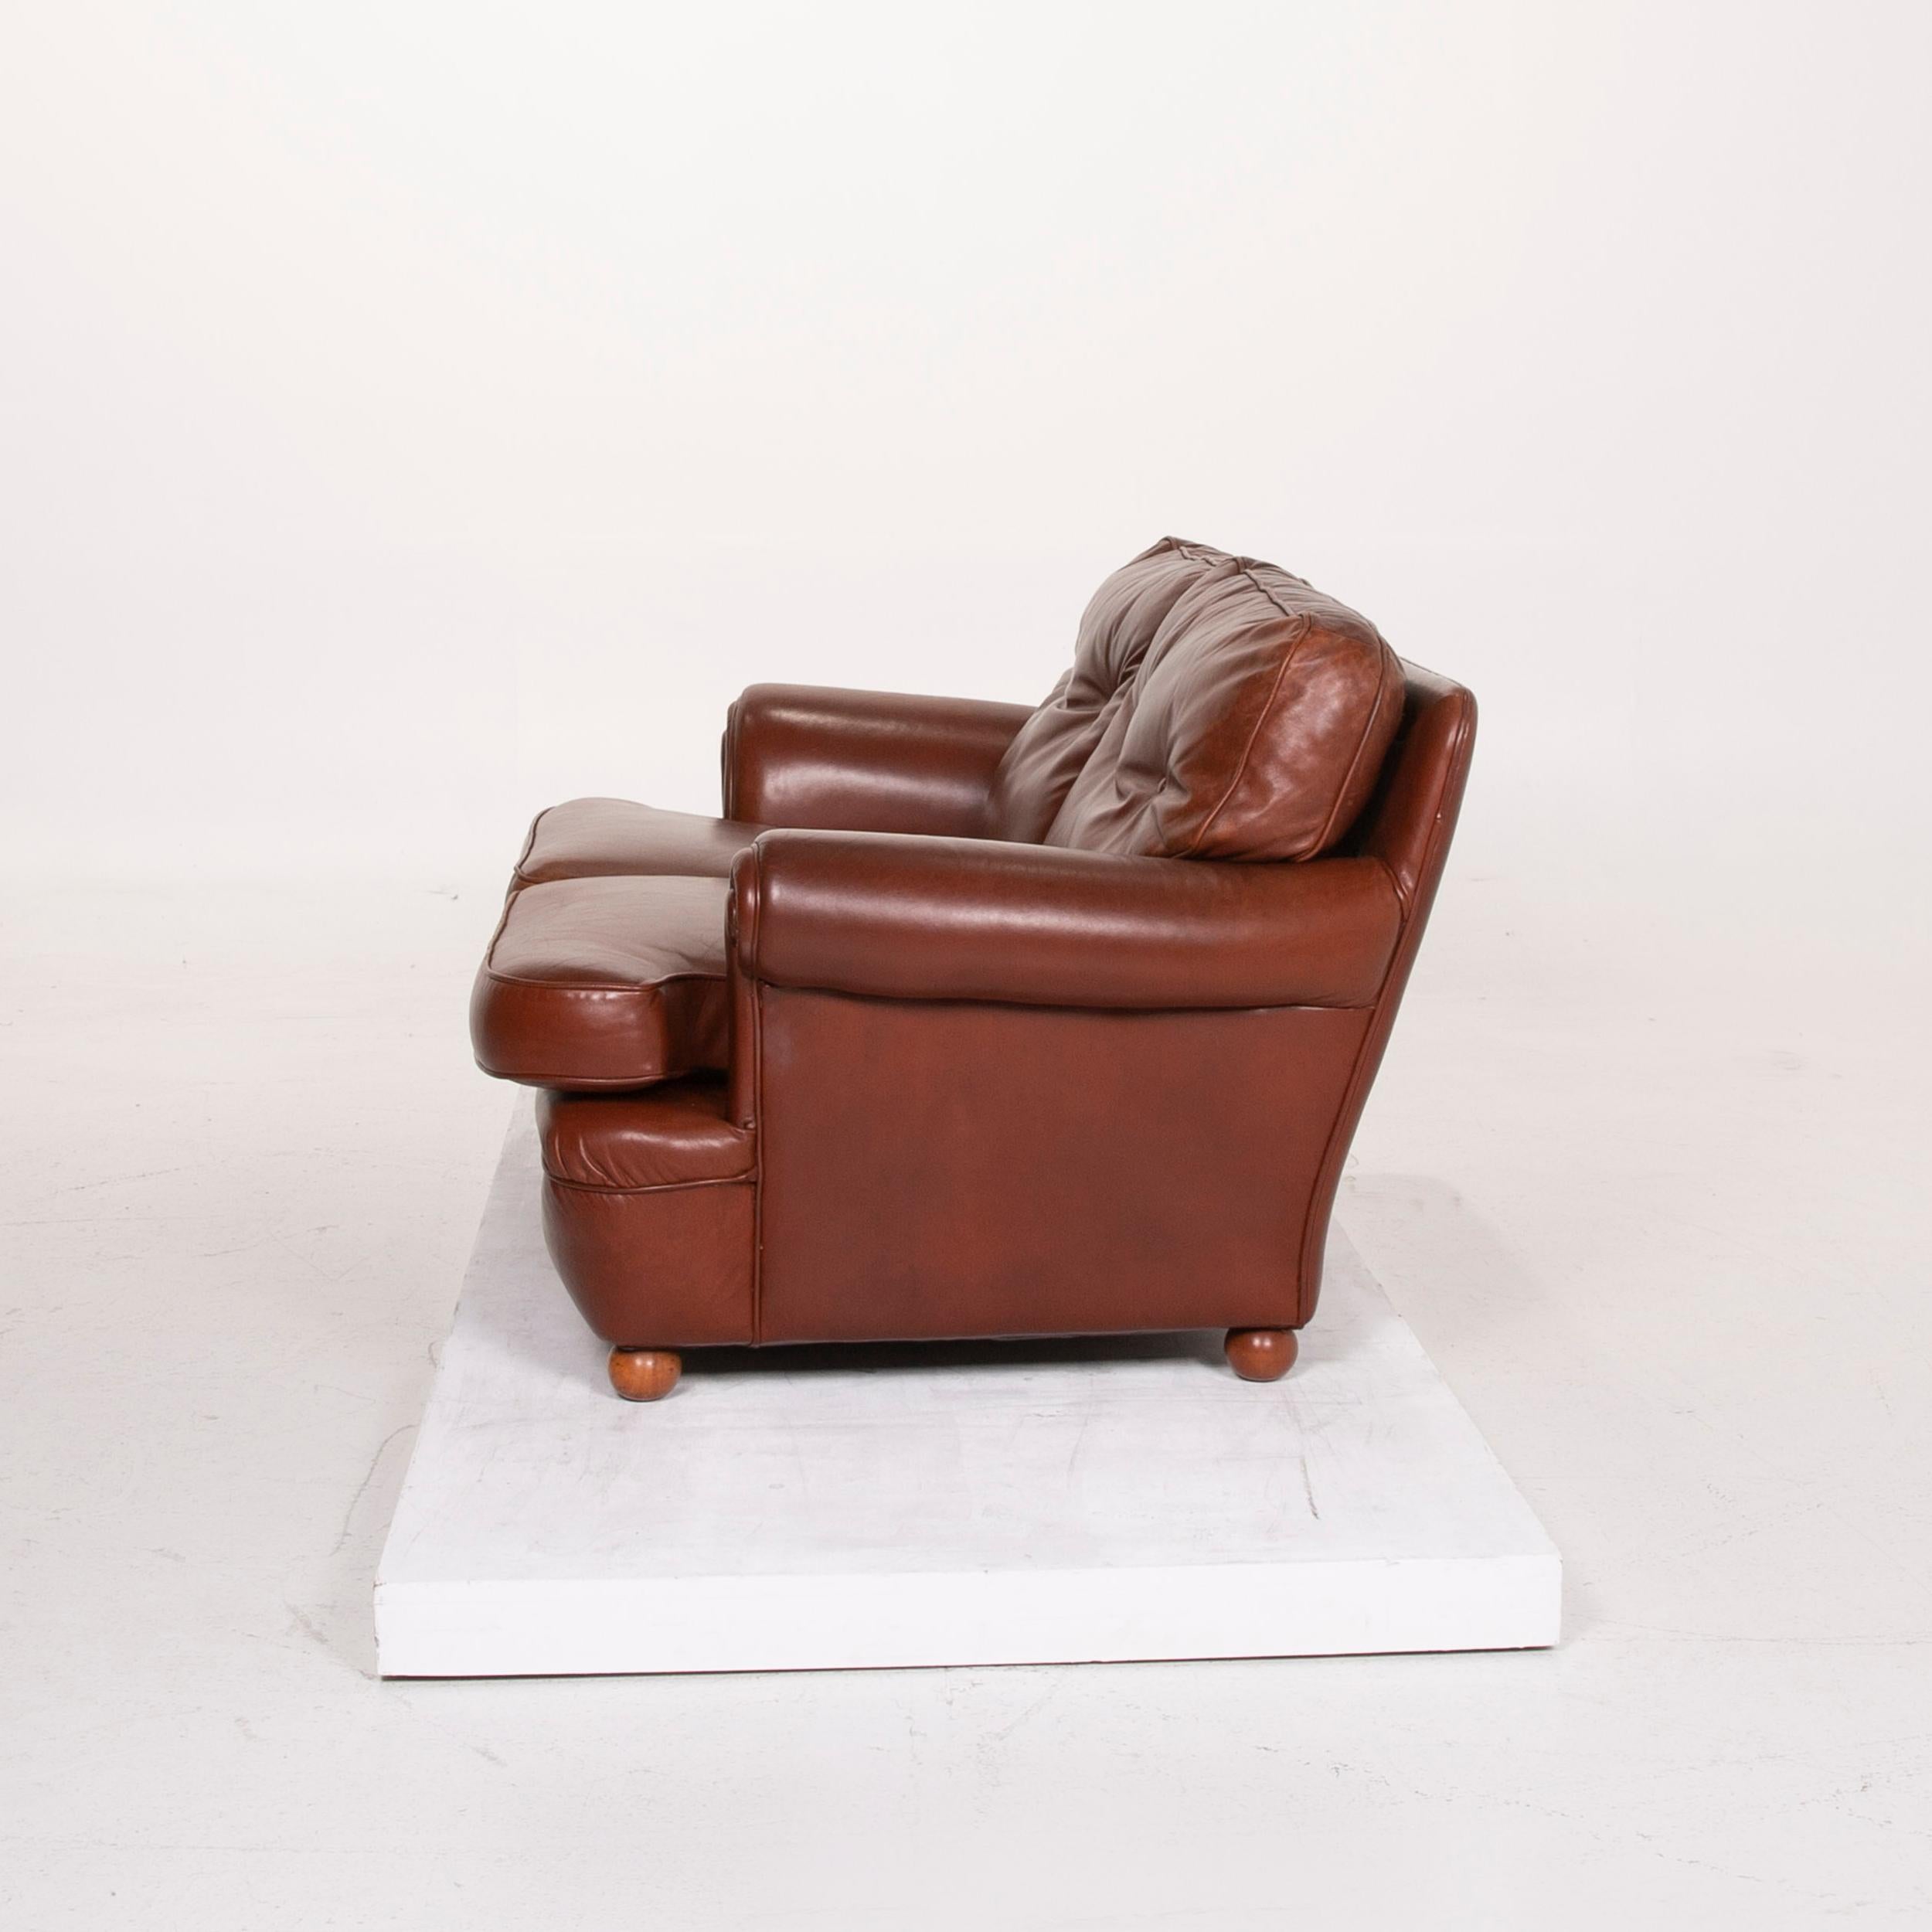 Poltrona Frau Leather Sofa Set Cognac Two-Seat Stool For Sale 5